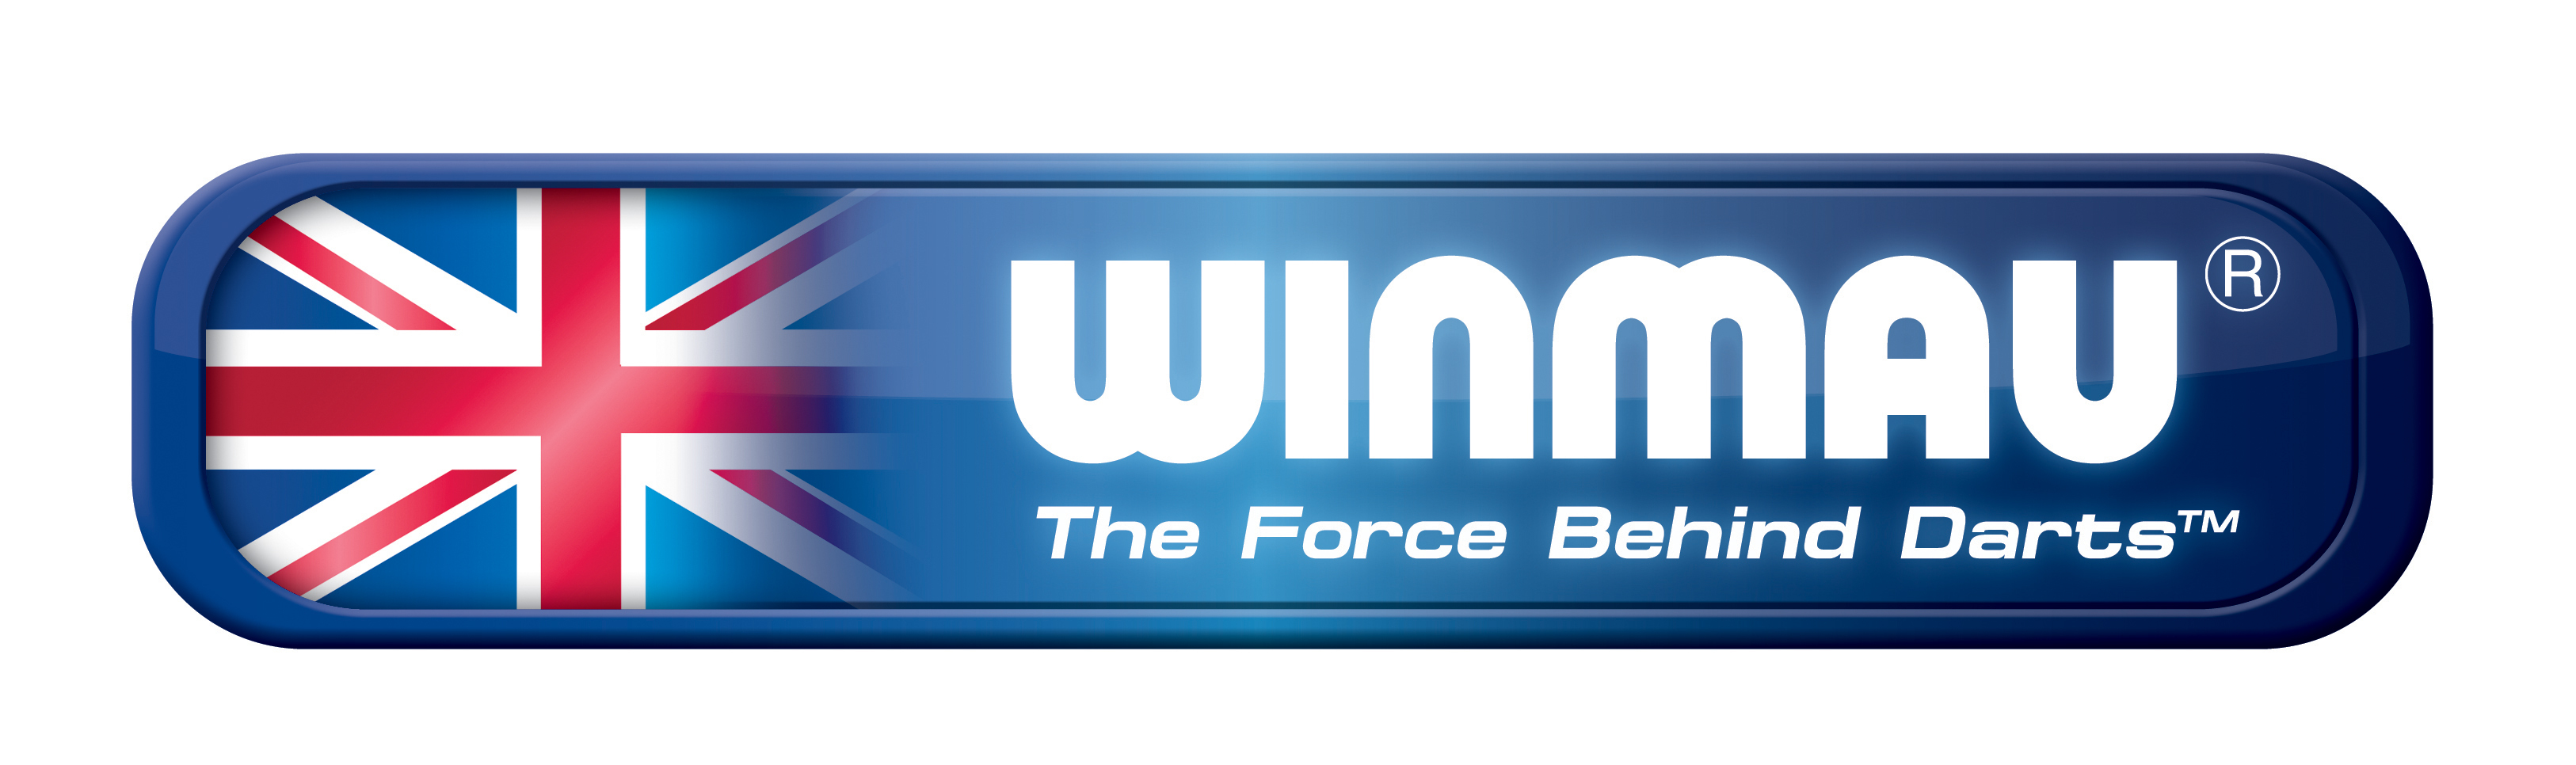 Winmau_logo